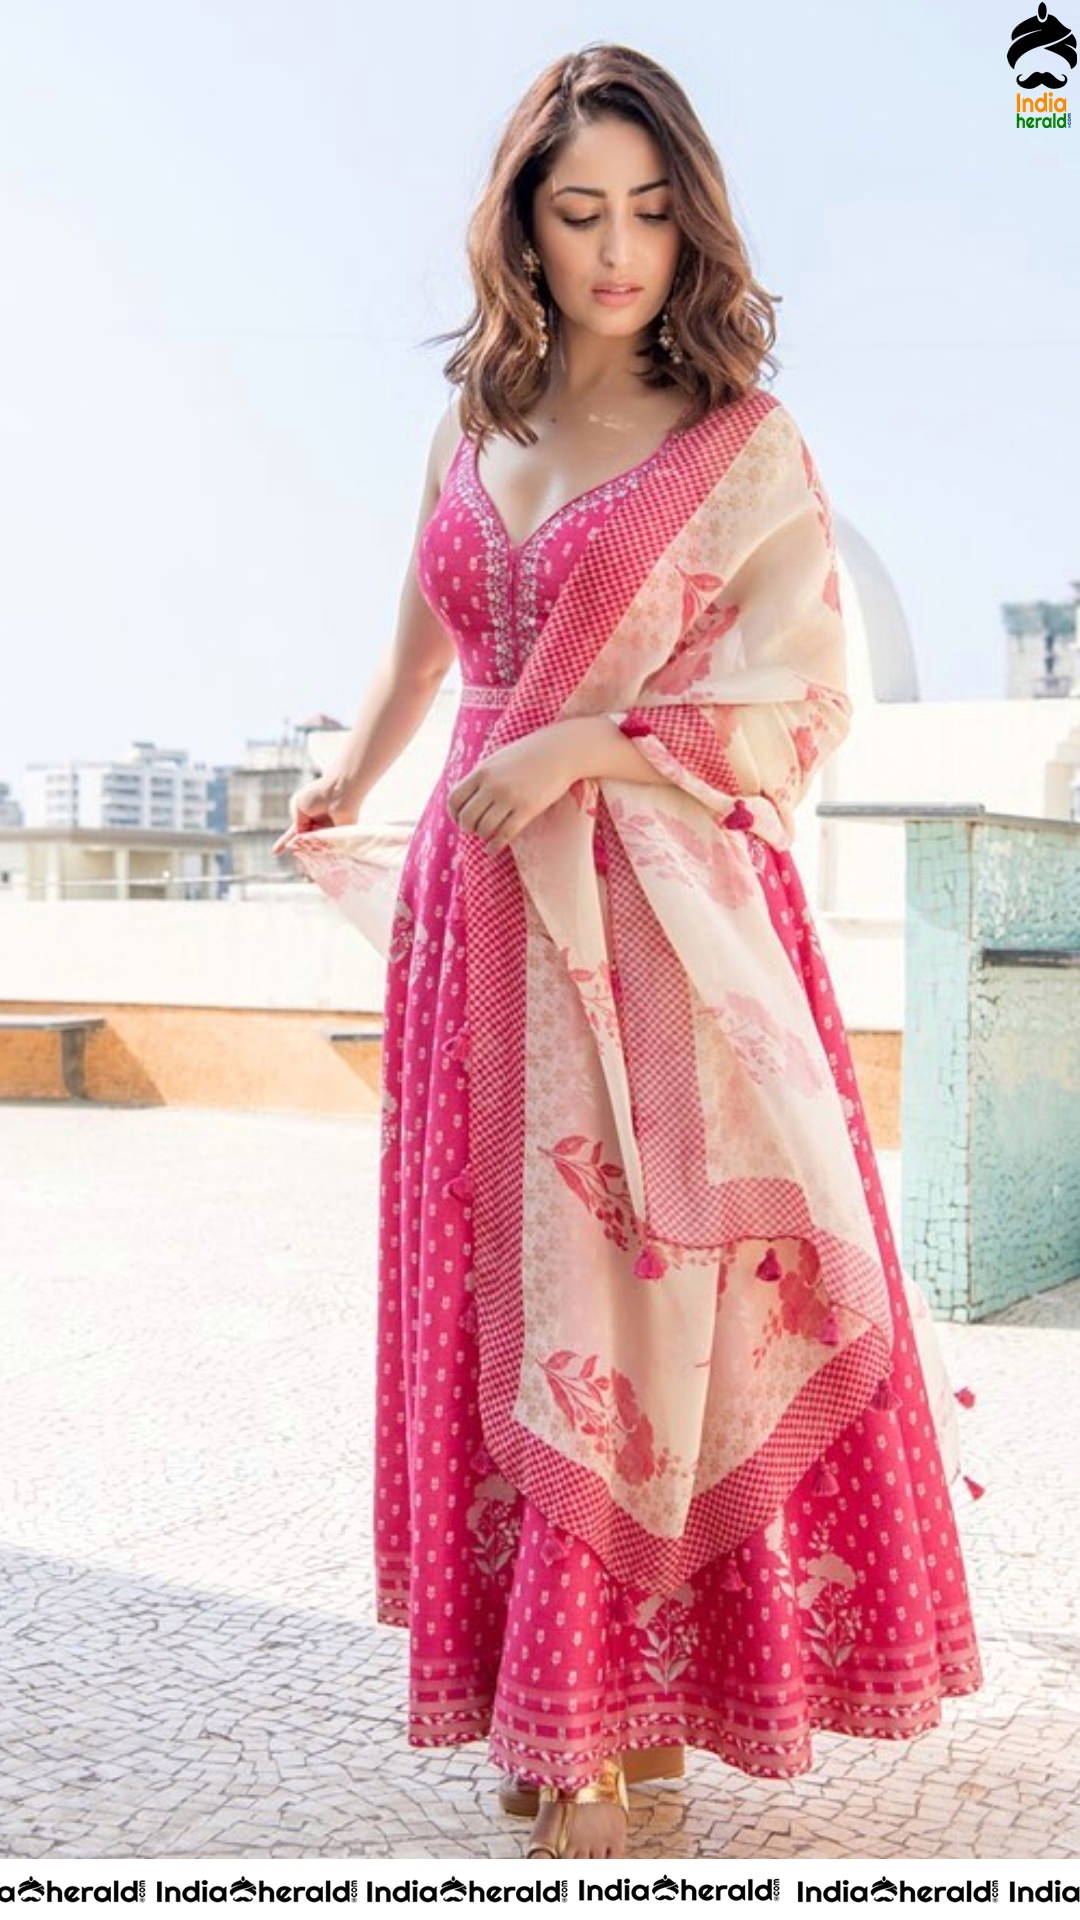 Yami Gautam Looking Pretty Elegant Stills in Saree